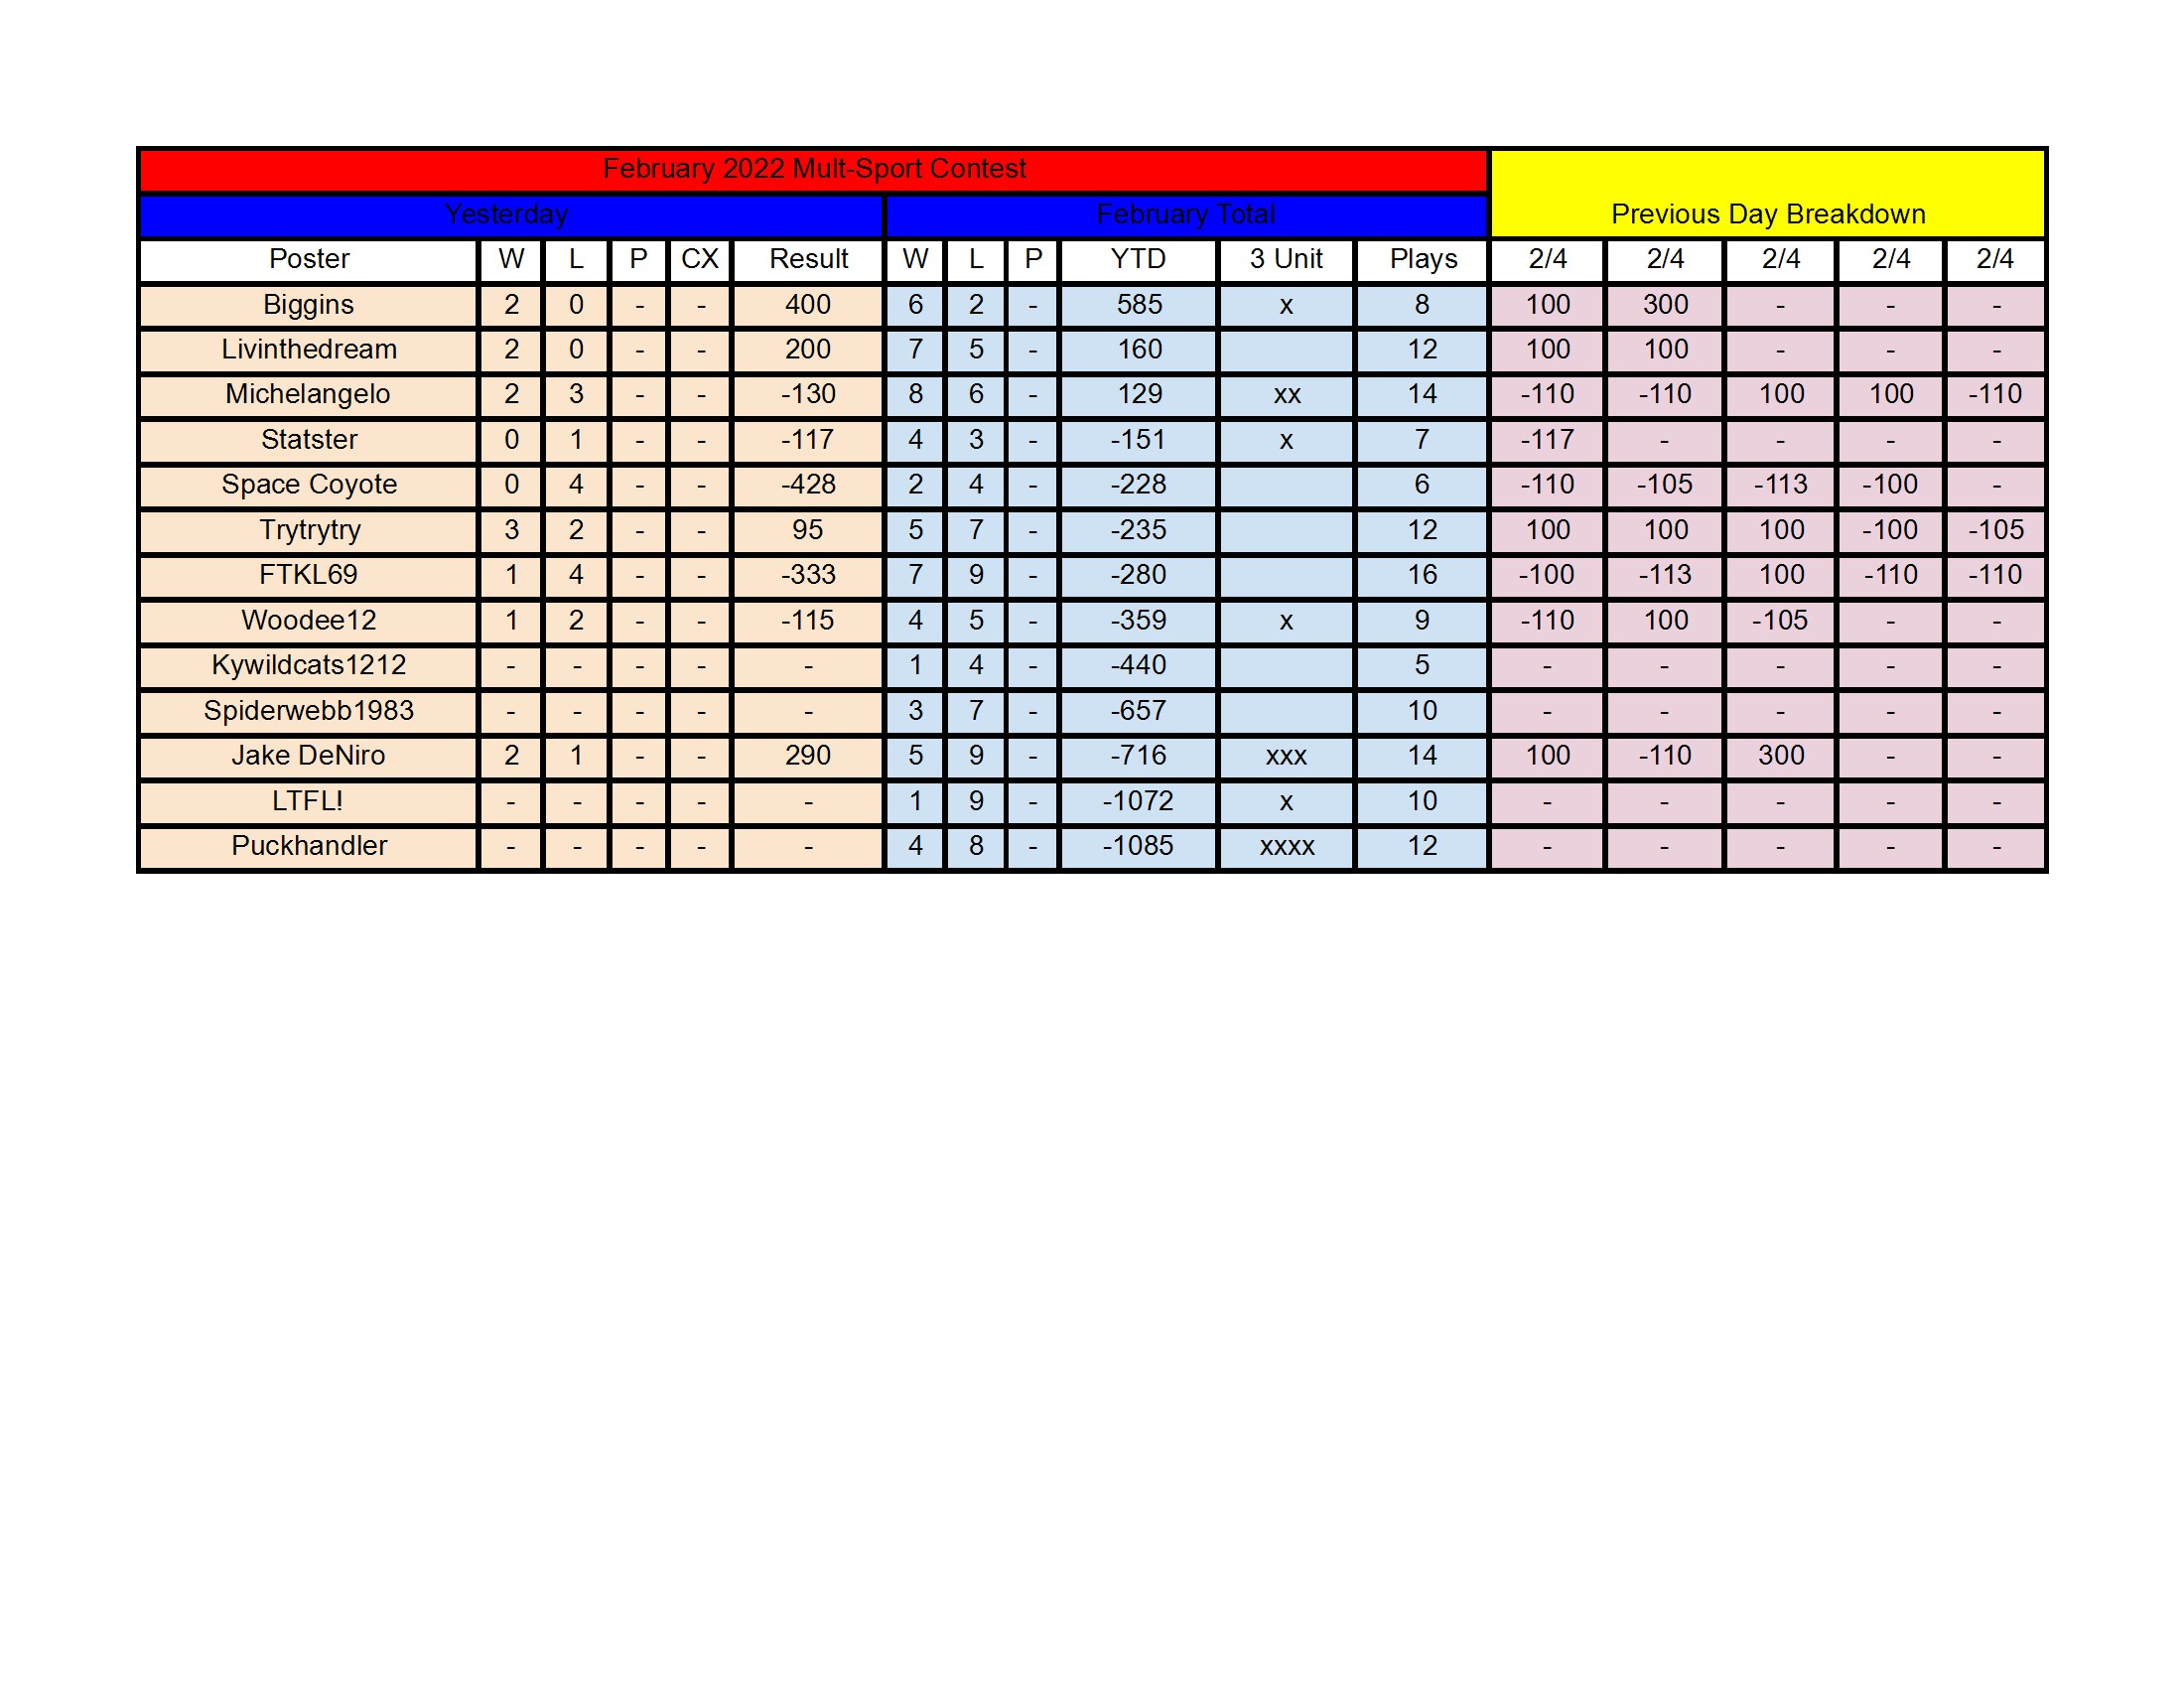 February Standings - 2_4 conv 1.jpeg